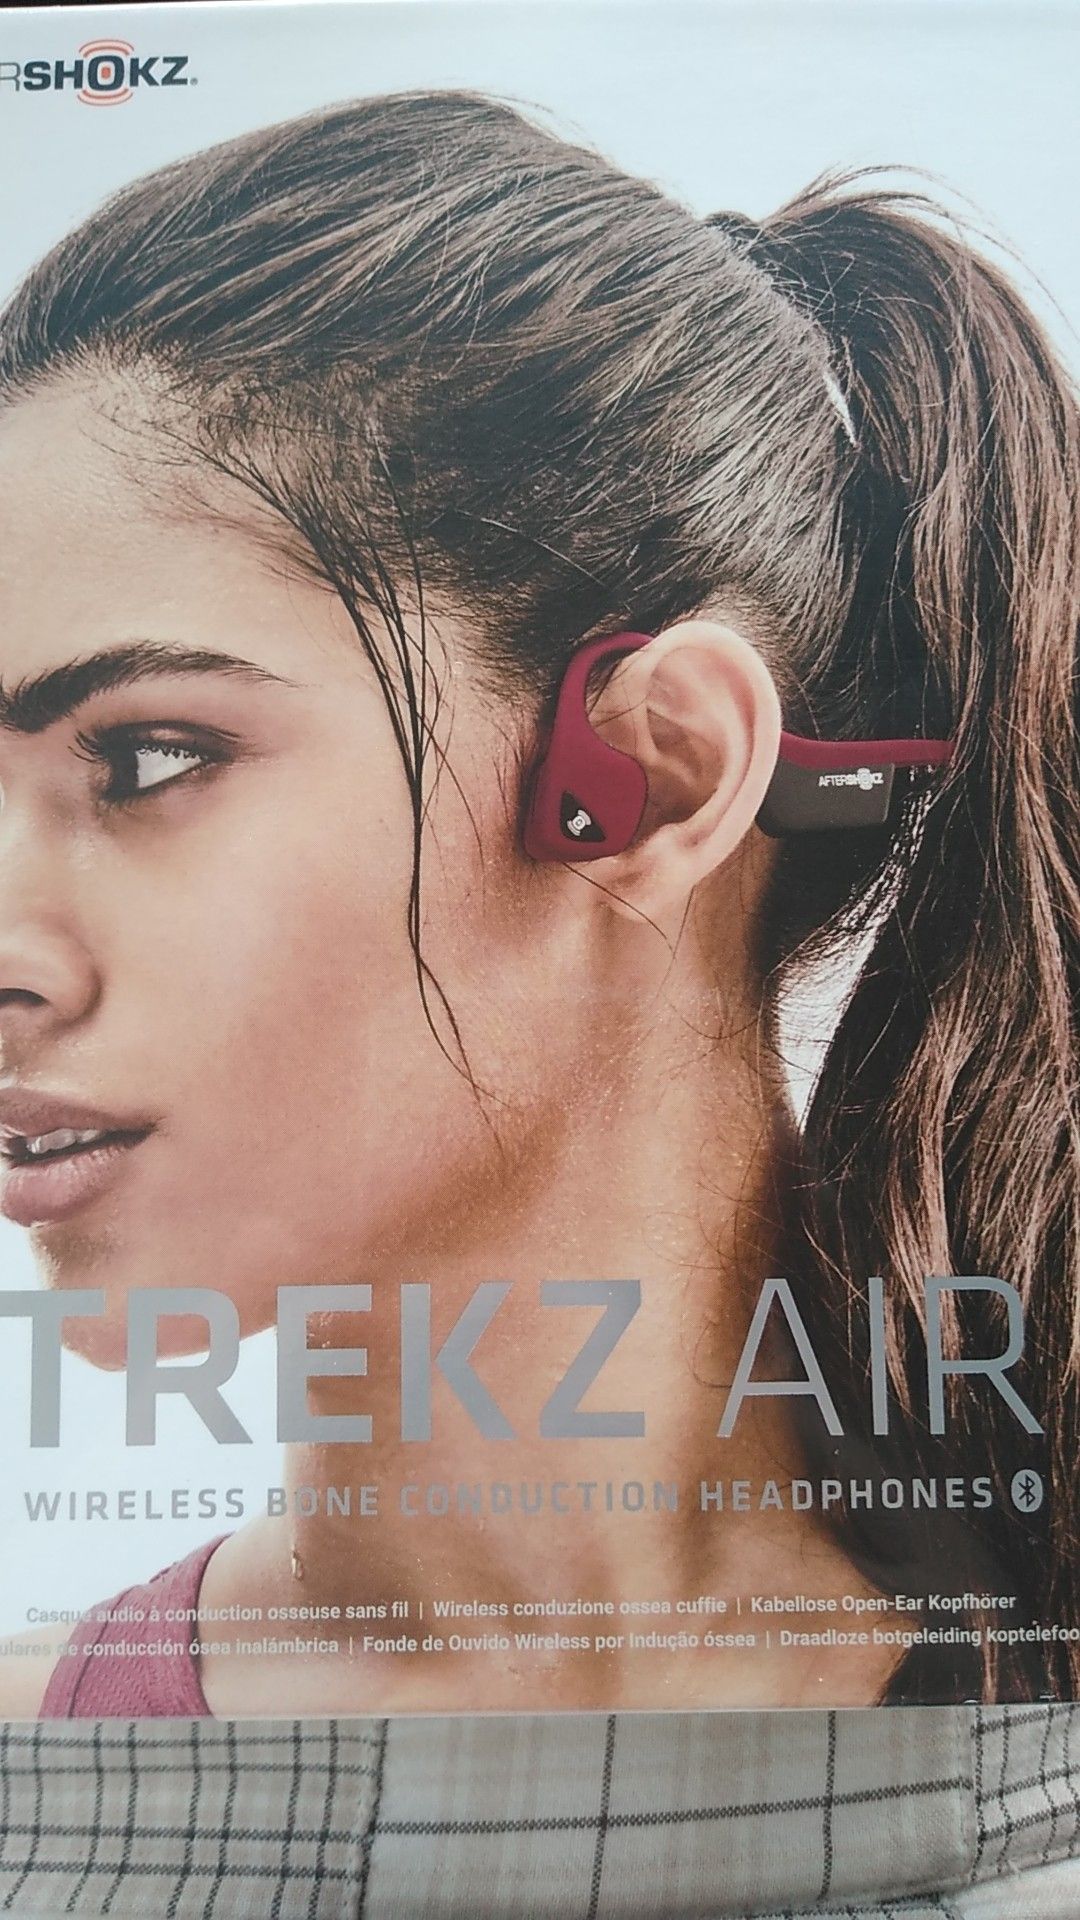 Trekz Air wireless bone conduction headphones